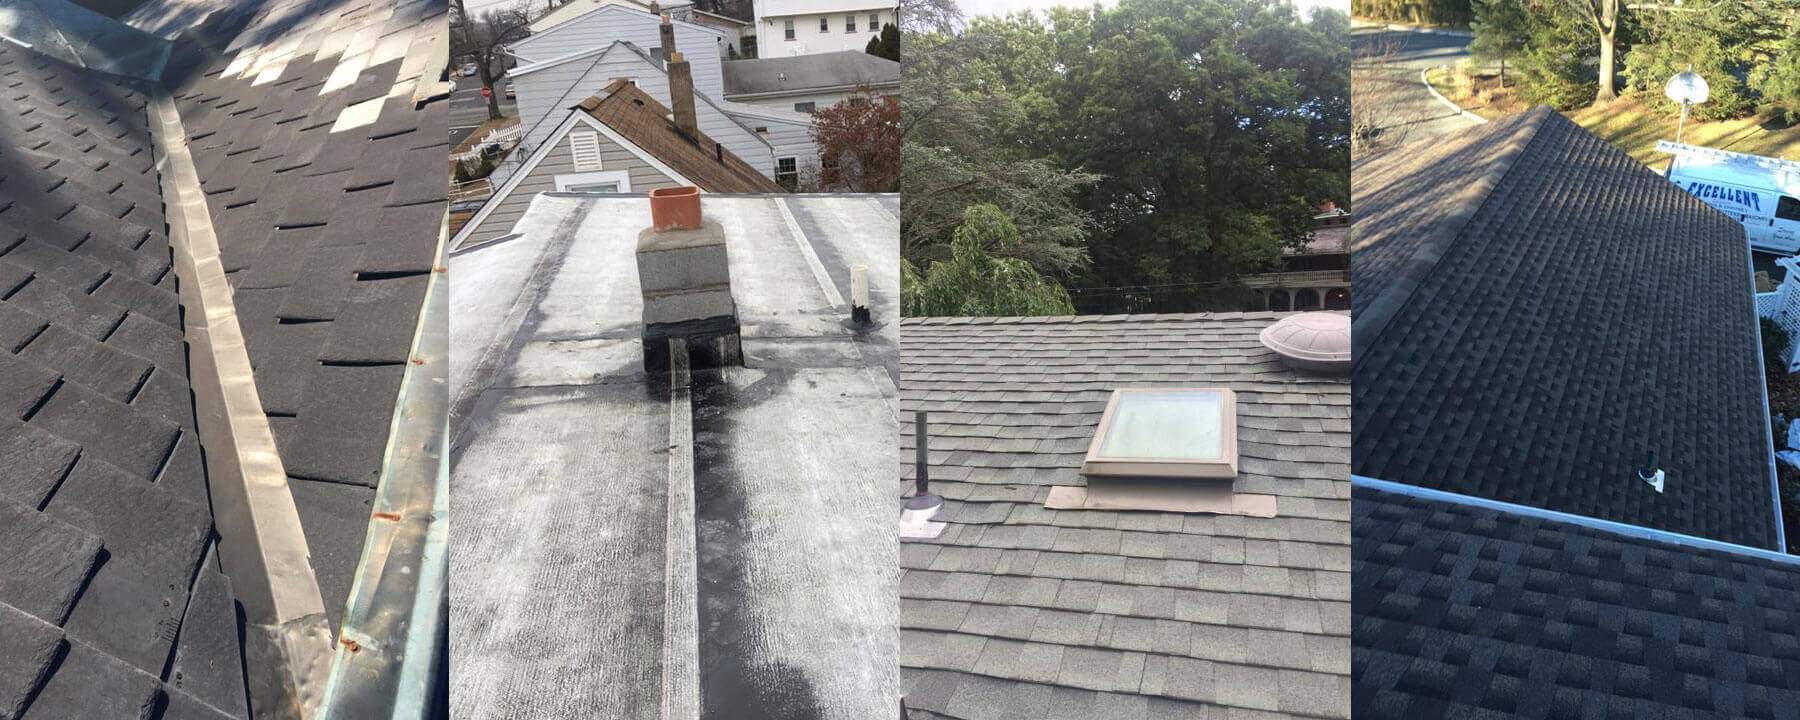 Roof Repair Service Wallington NJ